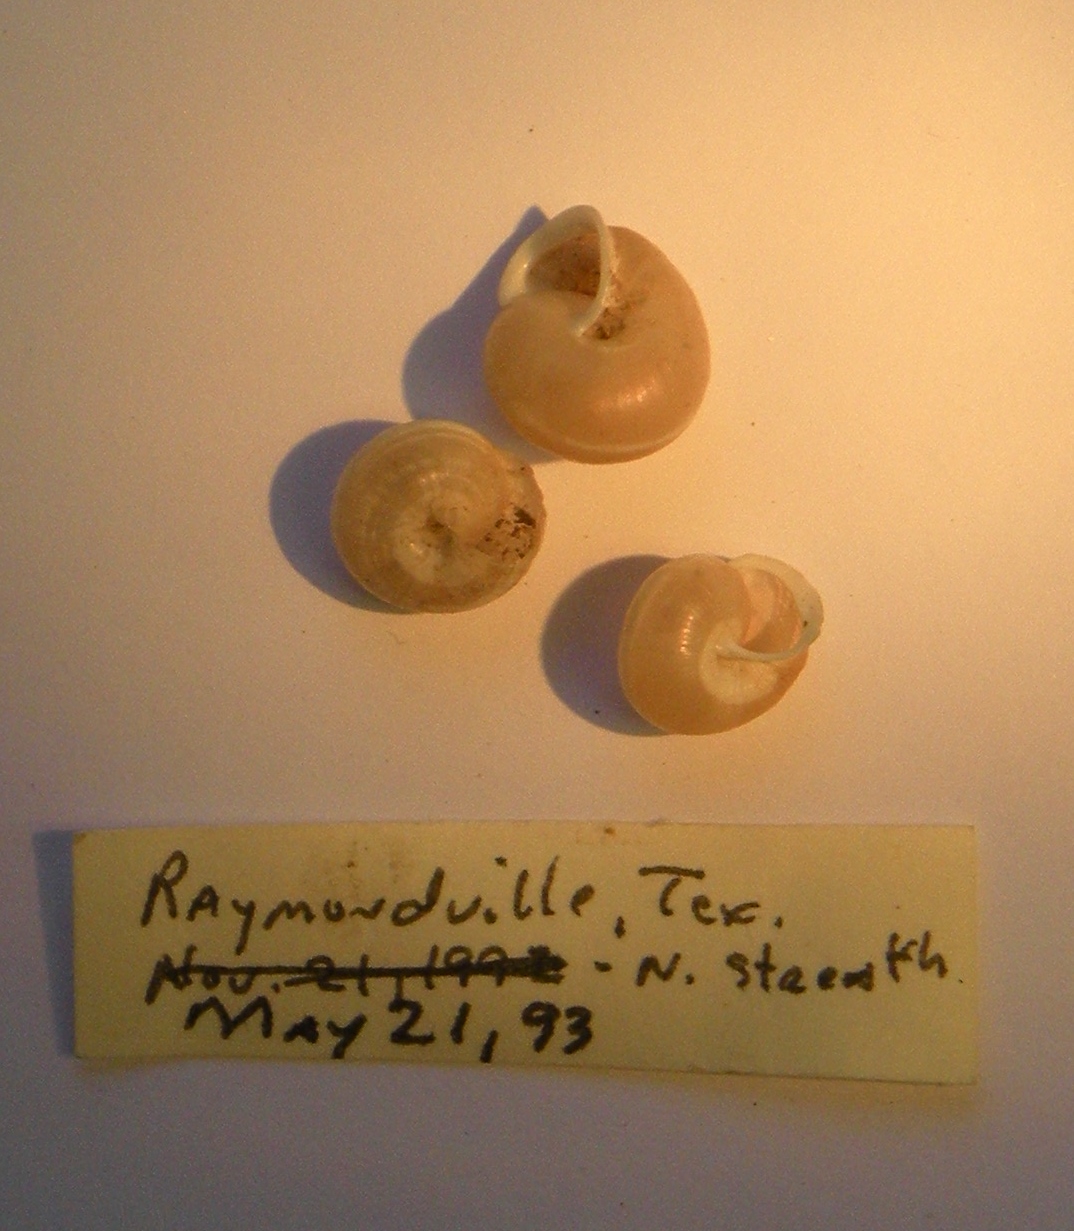 Photo taken by Jennifer Humphrey. Shells from Raymondville, Texas.